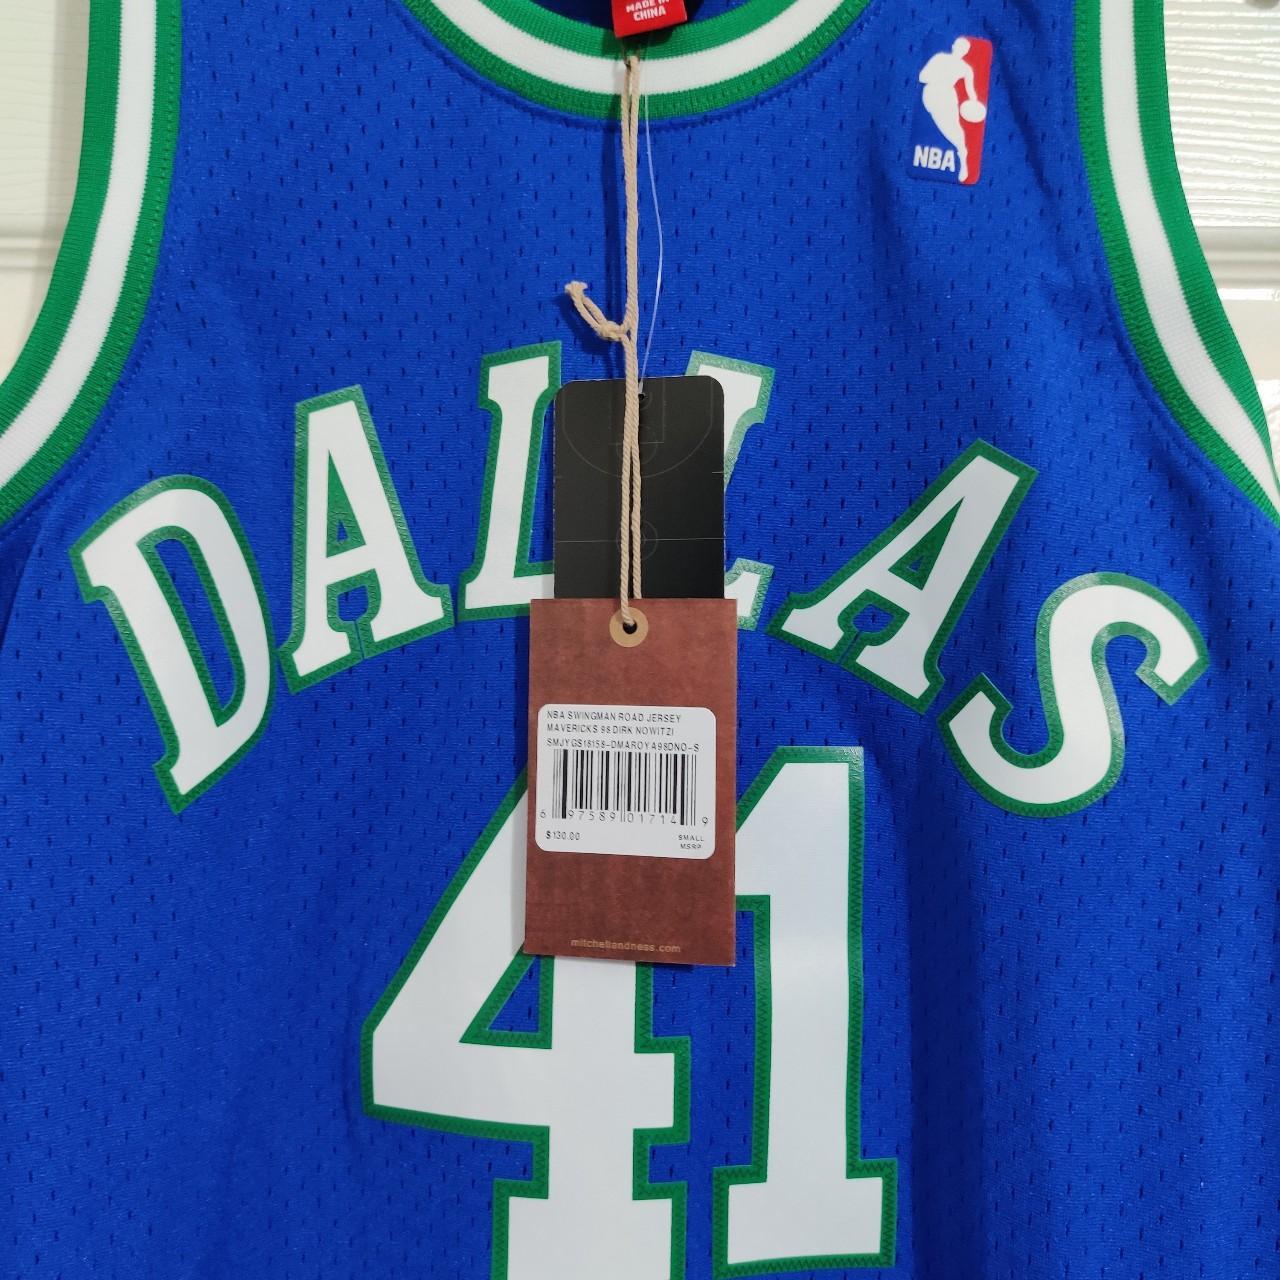 Dirk Nowitzki Dallas mavericks jersey size youth - Depop